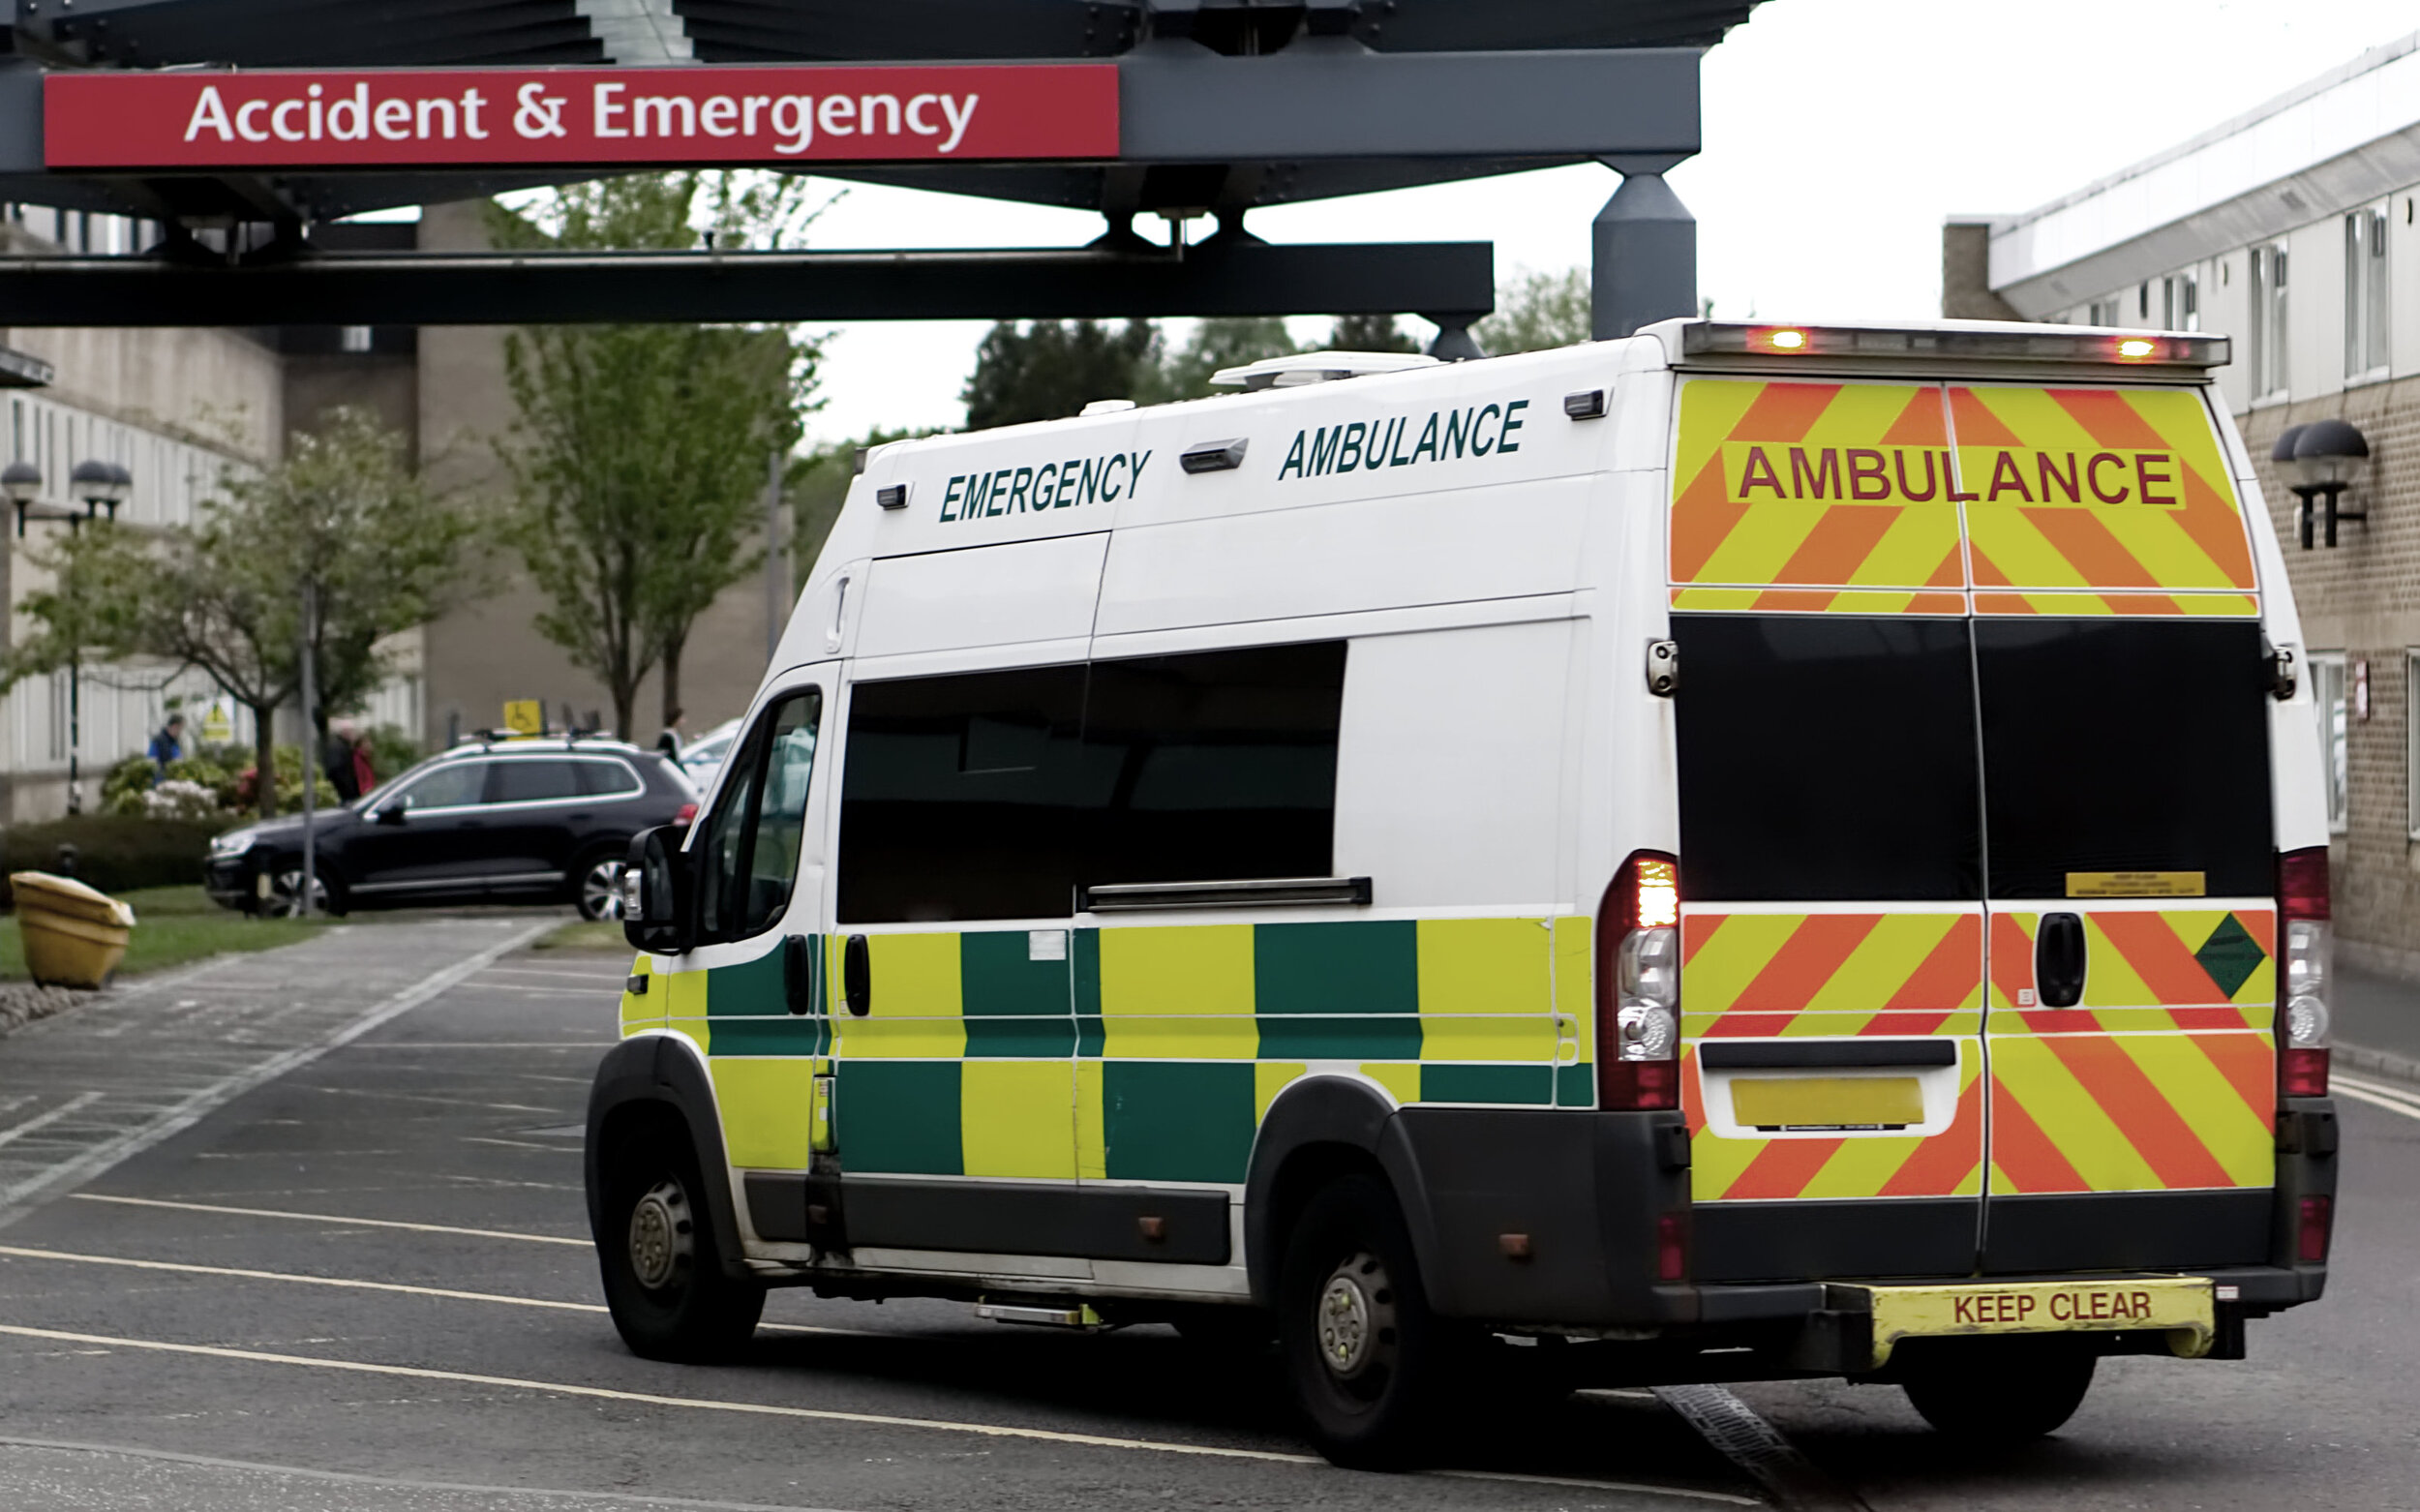 NUEVO-for-ambulances-emergency-vehicles@2x.jpg